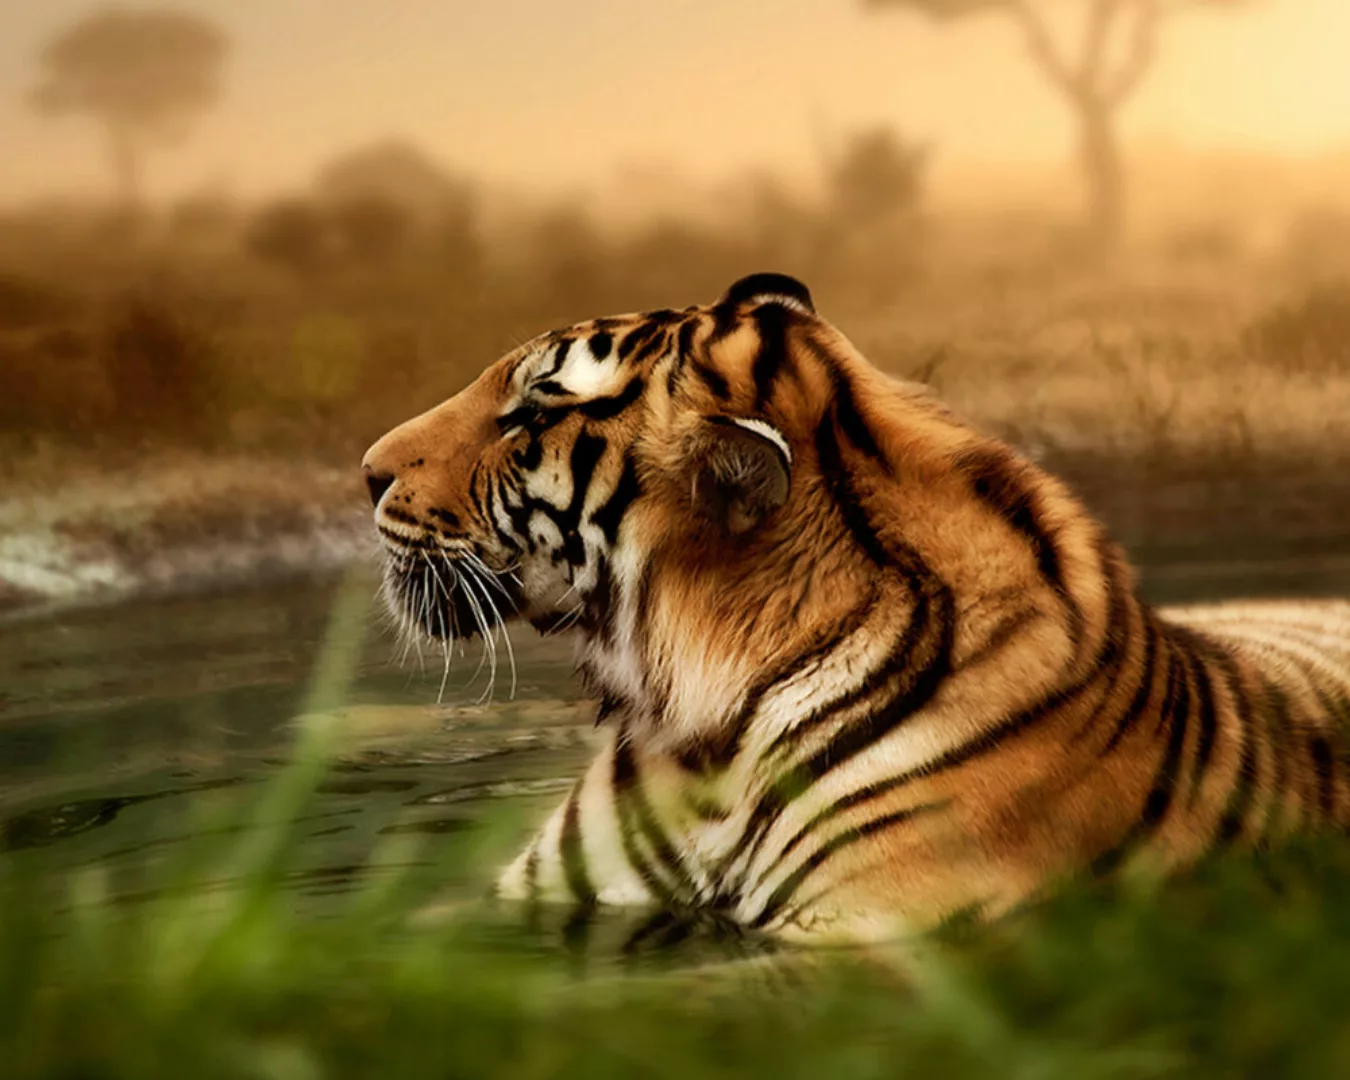 Fototapete "Tiger" 4,00x2,67 m / Strukturvlies Klassik günstig online kaufen